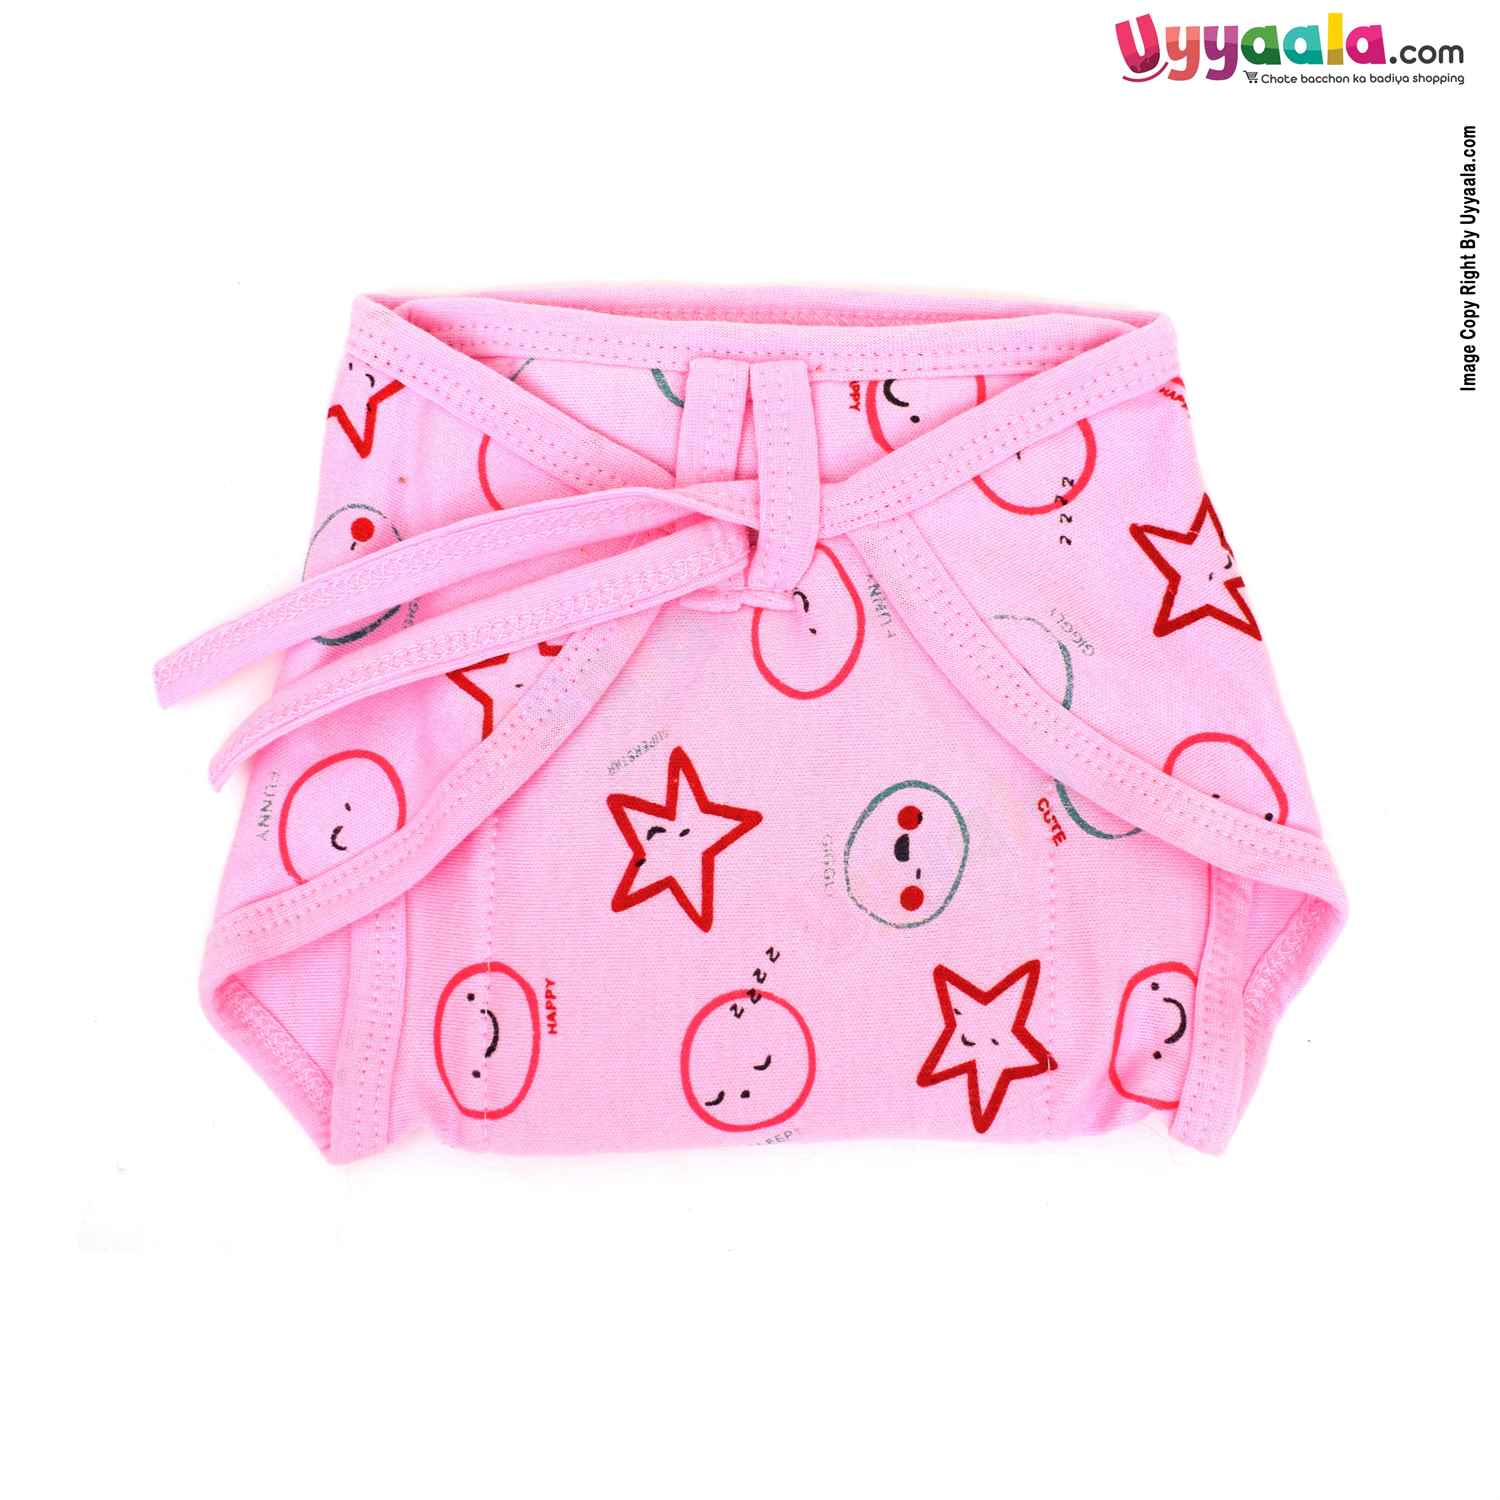 COZYCARE Washable Diapers Hosiery Tying Mode Emoji Print Pink, Yellow & Orange 3P Set (M)